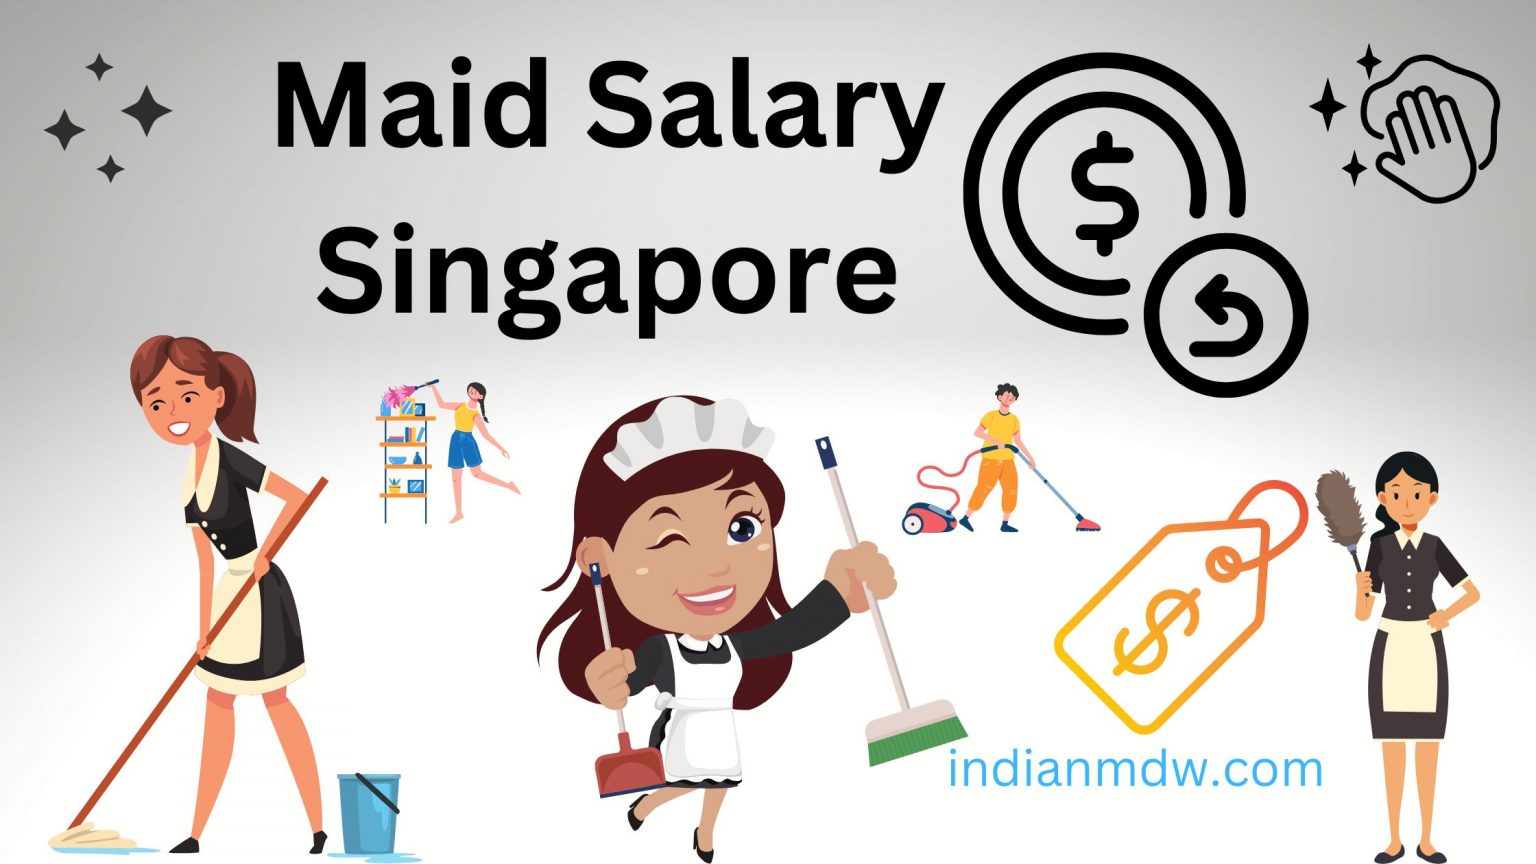 Maid salary minimum in Singapore is it 600 or 700?